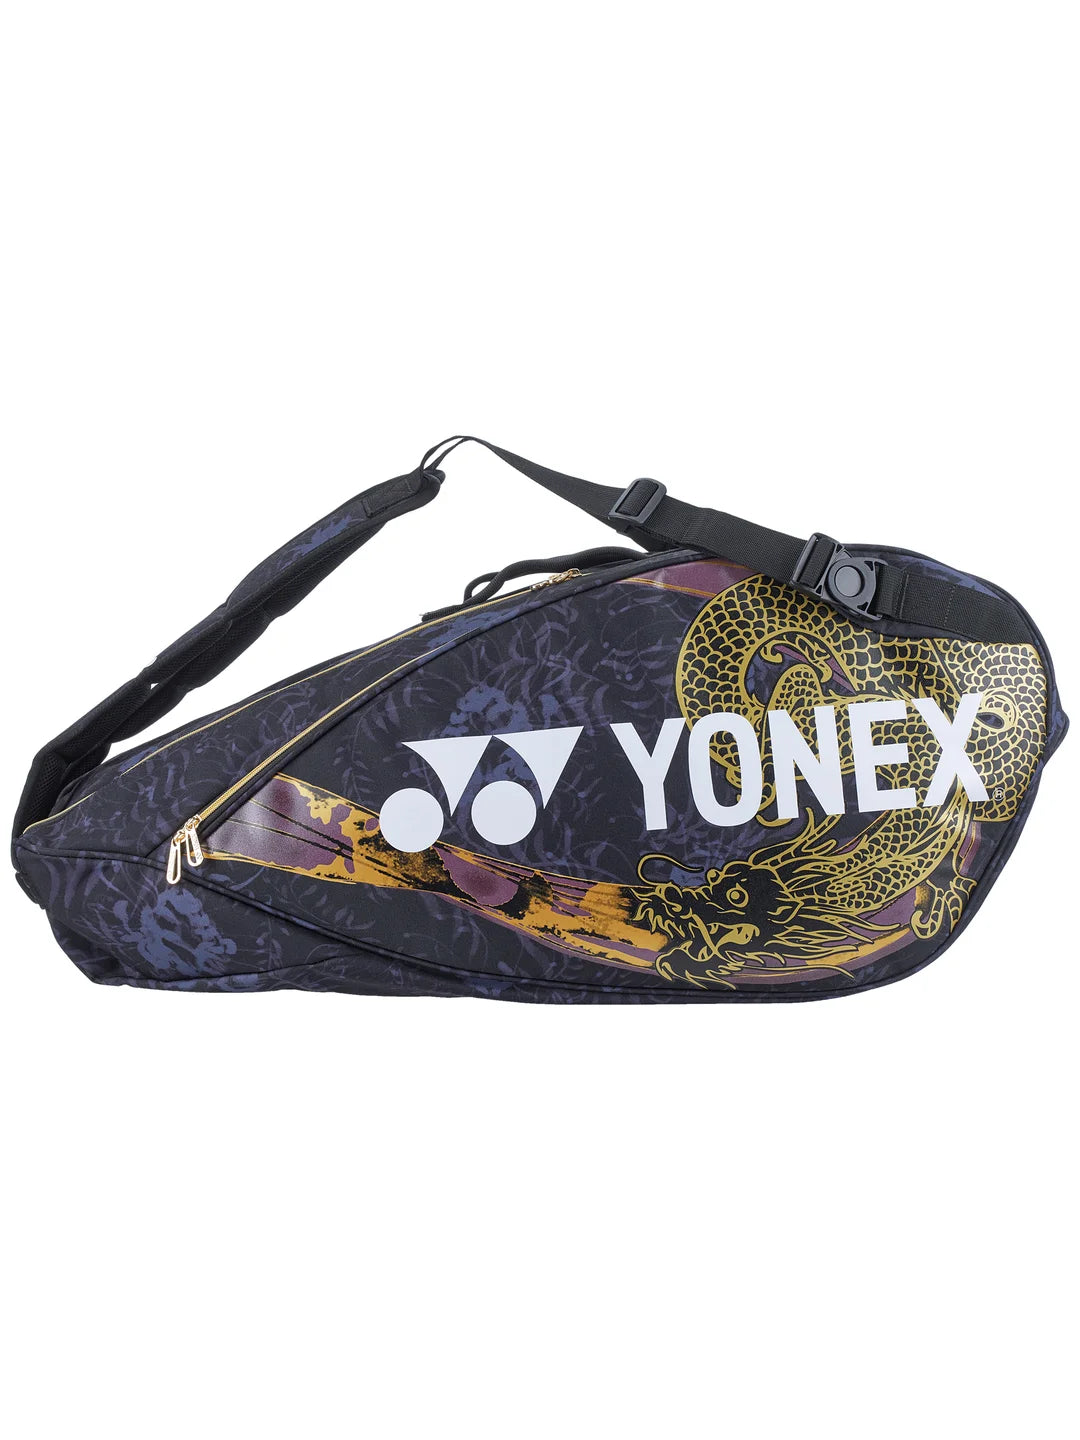 YONEX OSAKA PRO BAGN926 RACKET BAG (6PCS)